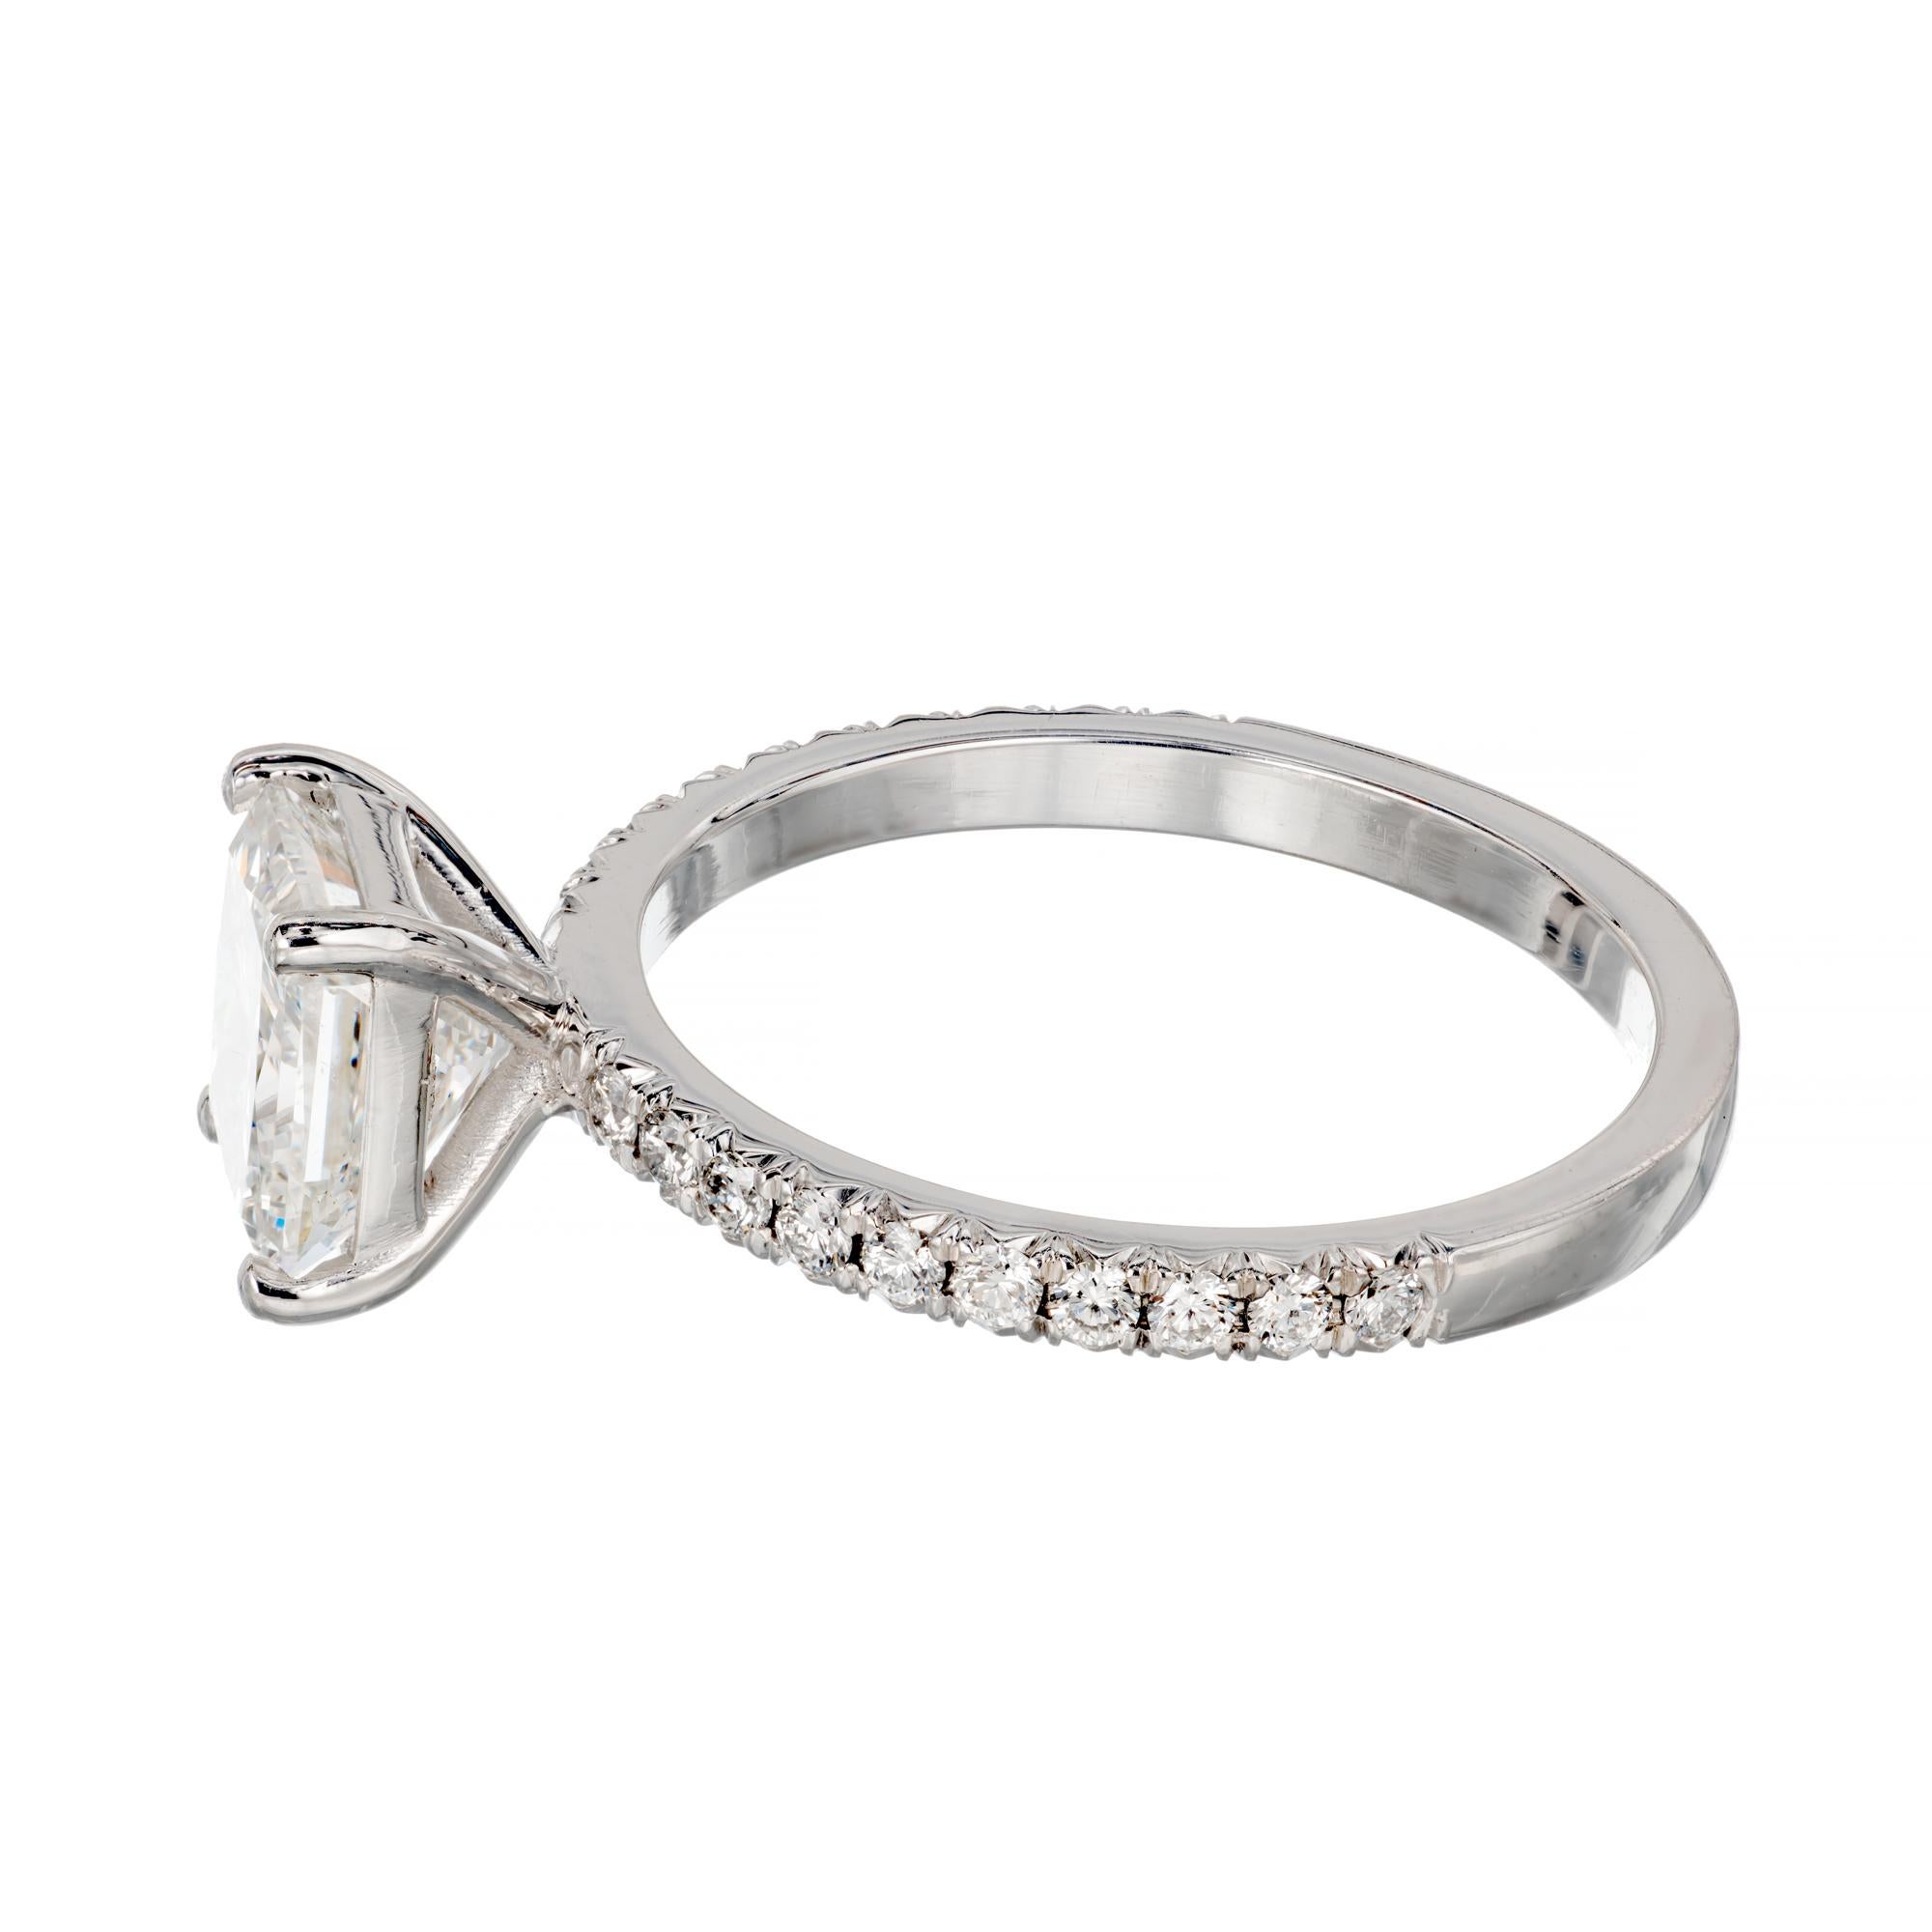 Peter Suchy EGL Certified 1.61 Carat Diamond Platinum Engagement Ring For Sale 1